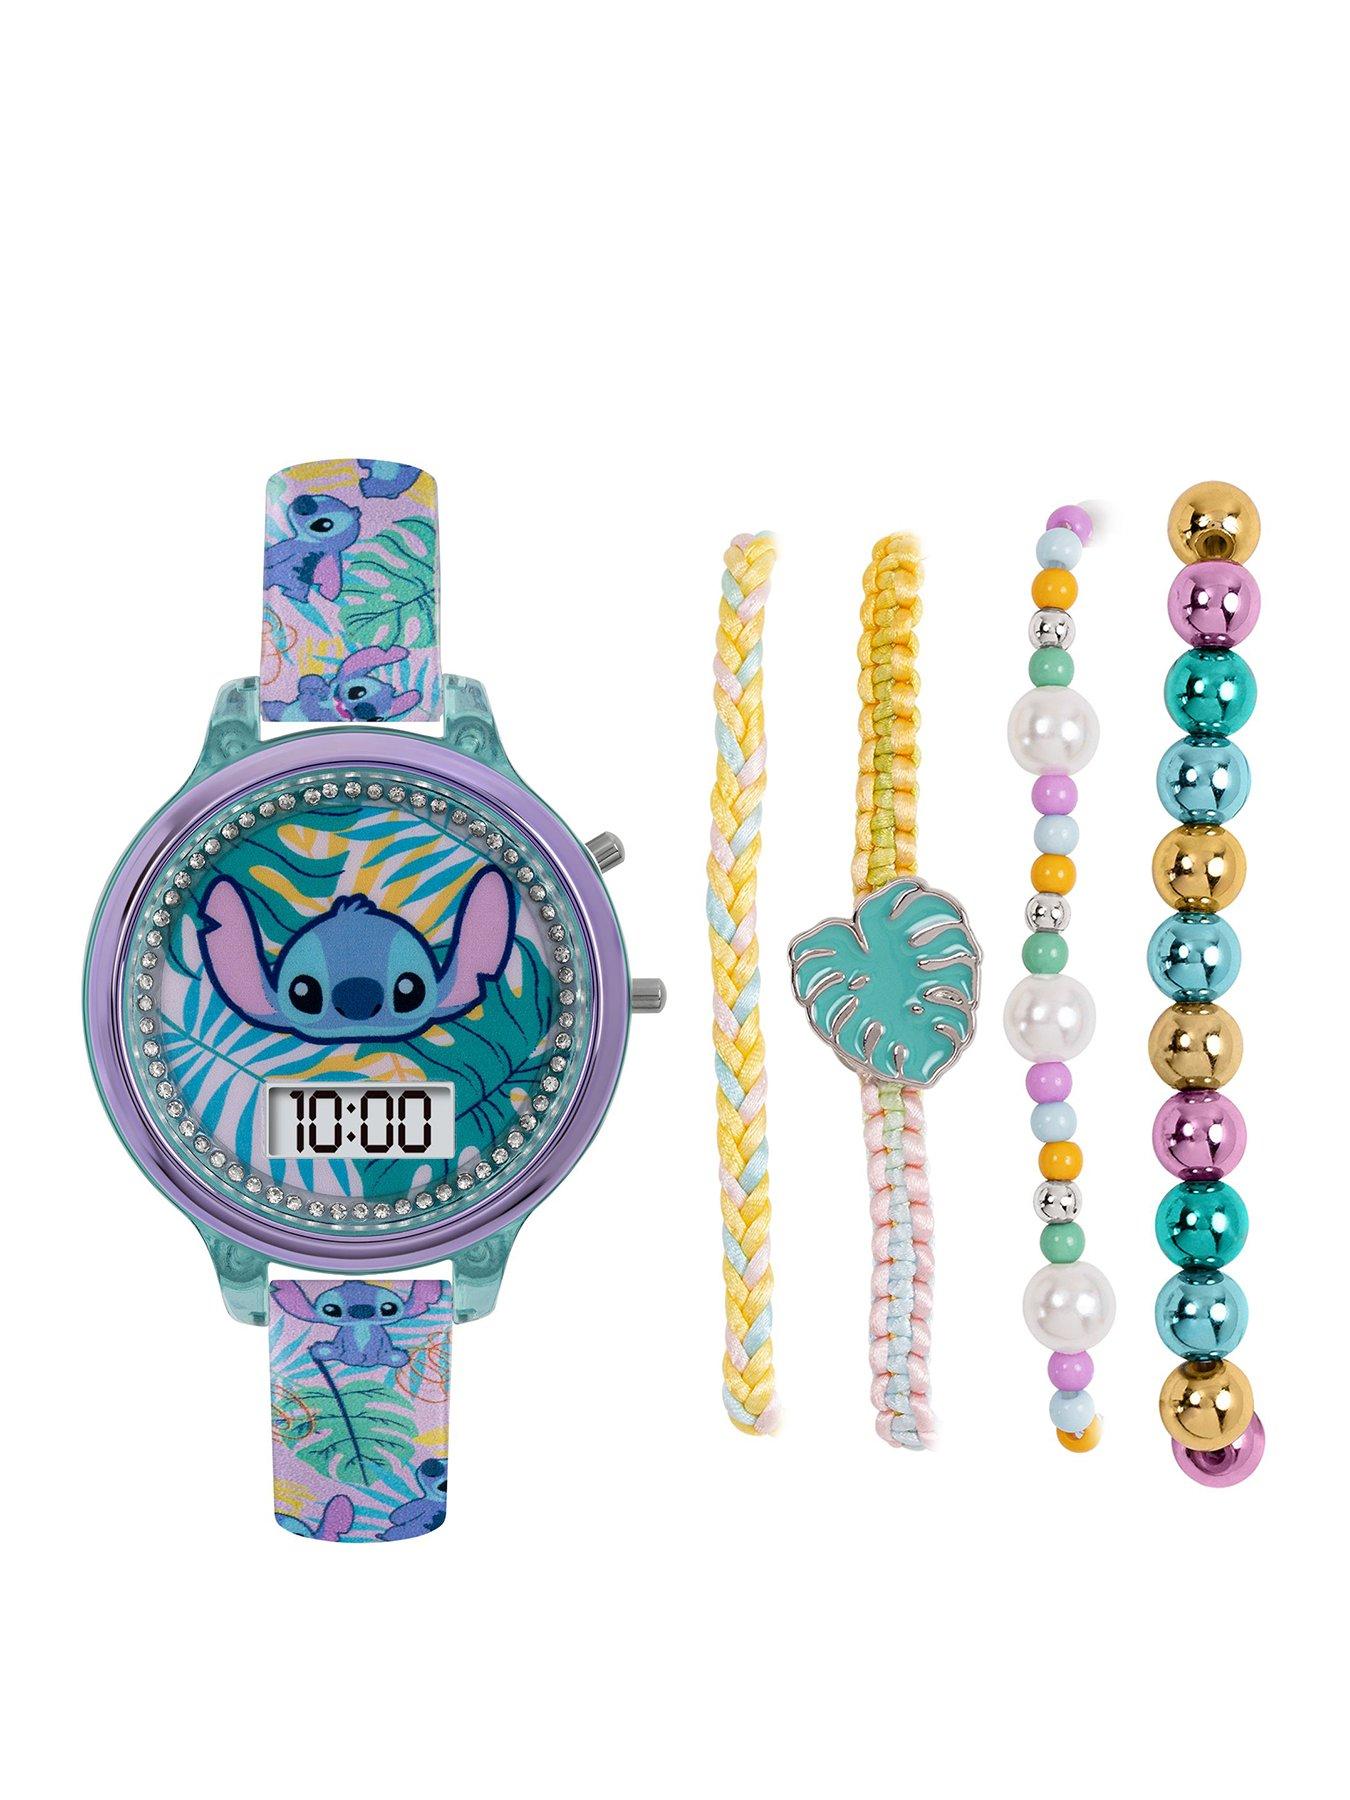 Lilo & Stitch Wrist Watch Kids Girls and Boys gift jewellery